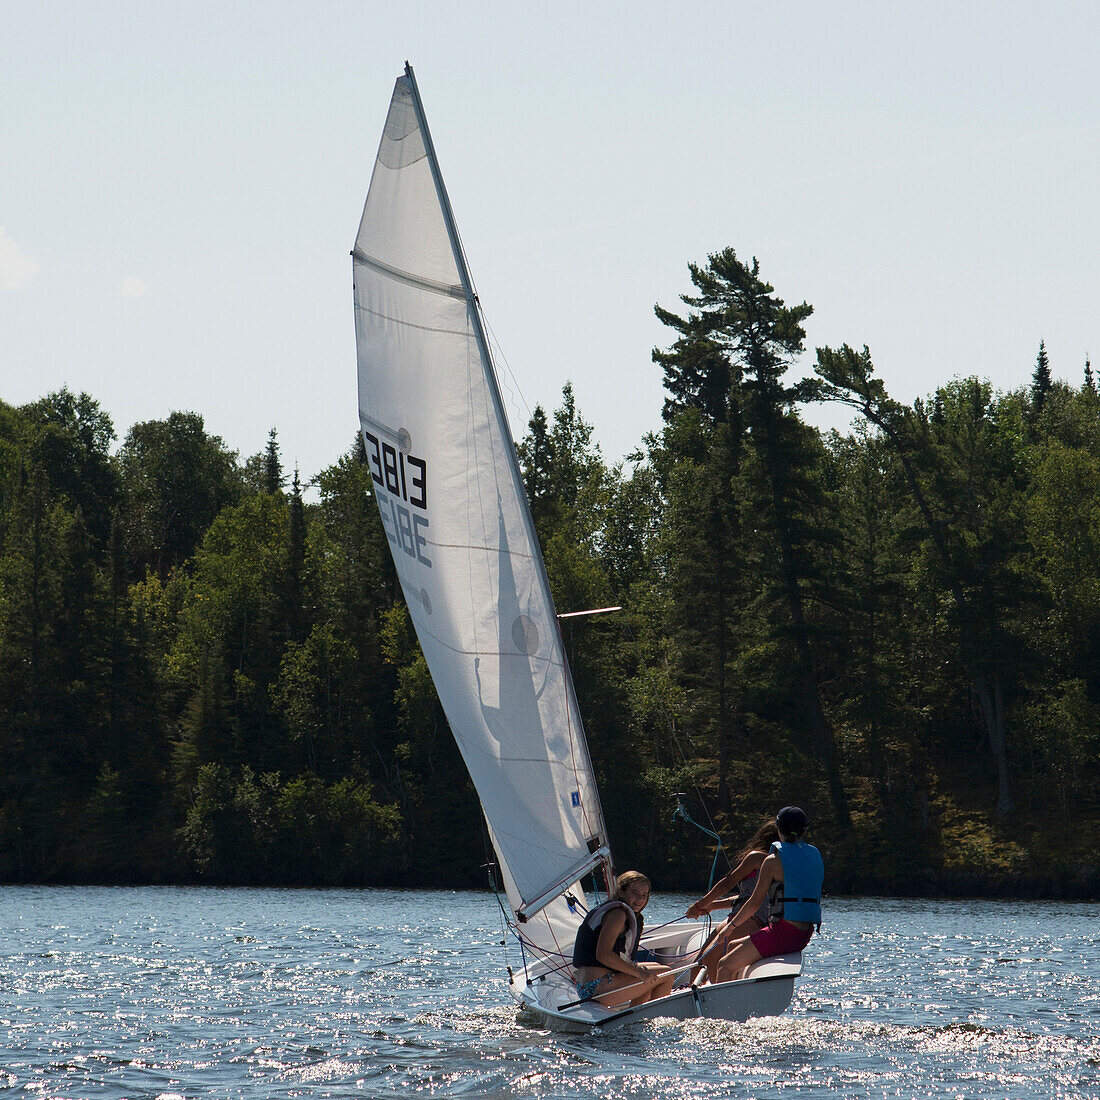 'Three teenagers on a sailboat in a lake;Kenora ontario canada'